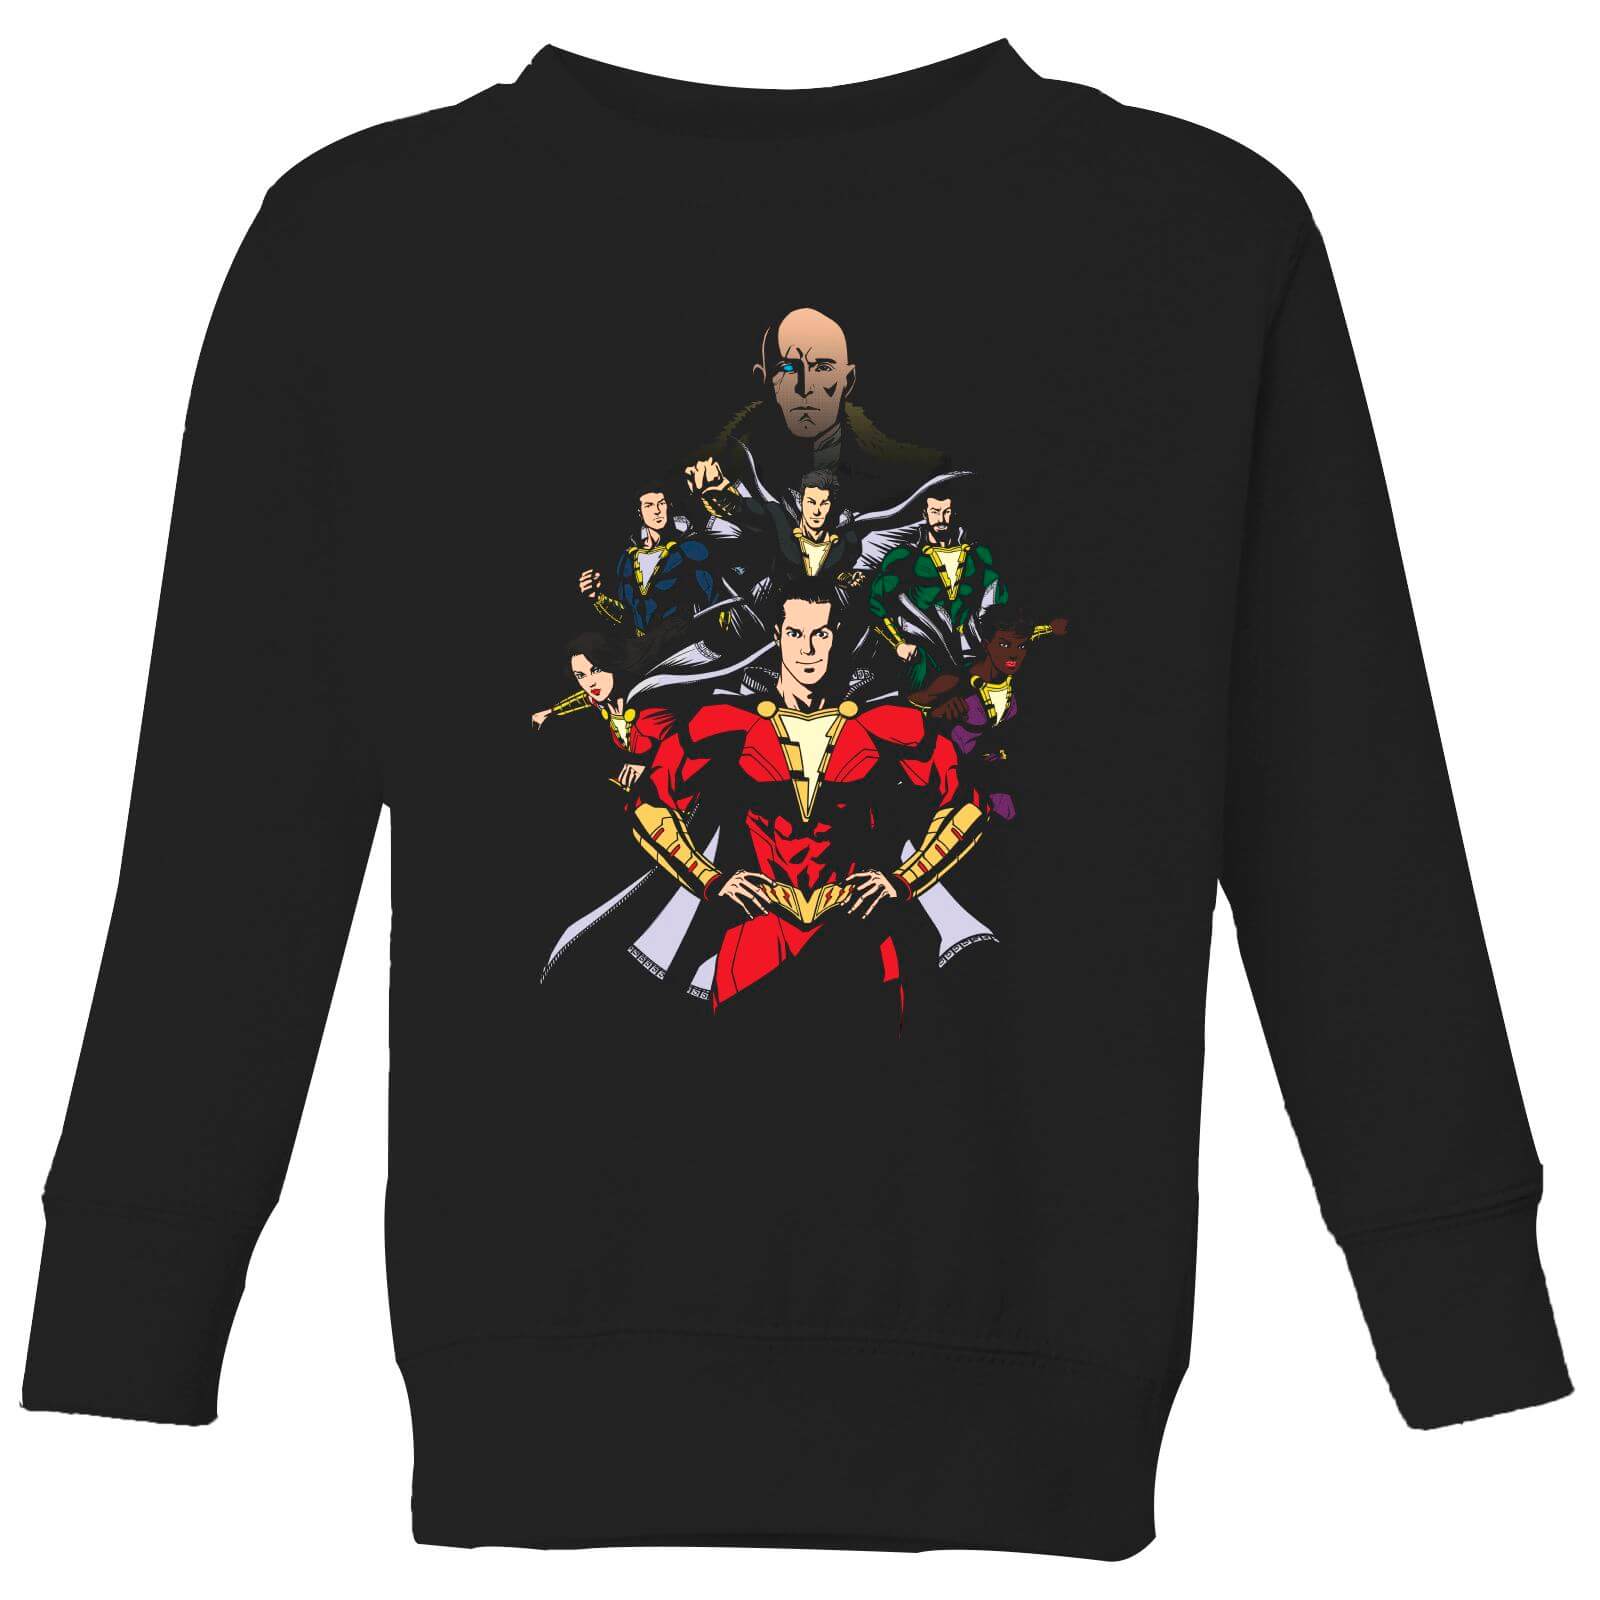 Dc Comics Shazam team up kids' sweatshirt - black - 7-8 years - black